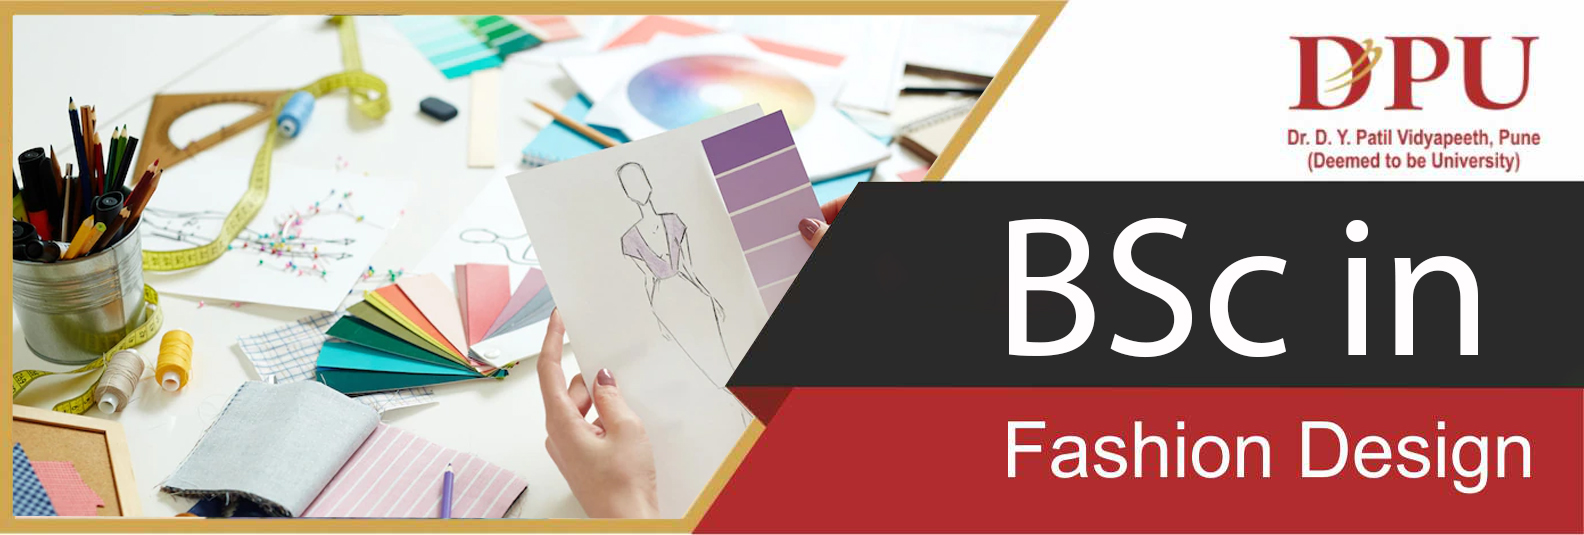 Bachelor in Science in Fashion Design | B. Sc. in Fashion Design